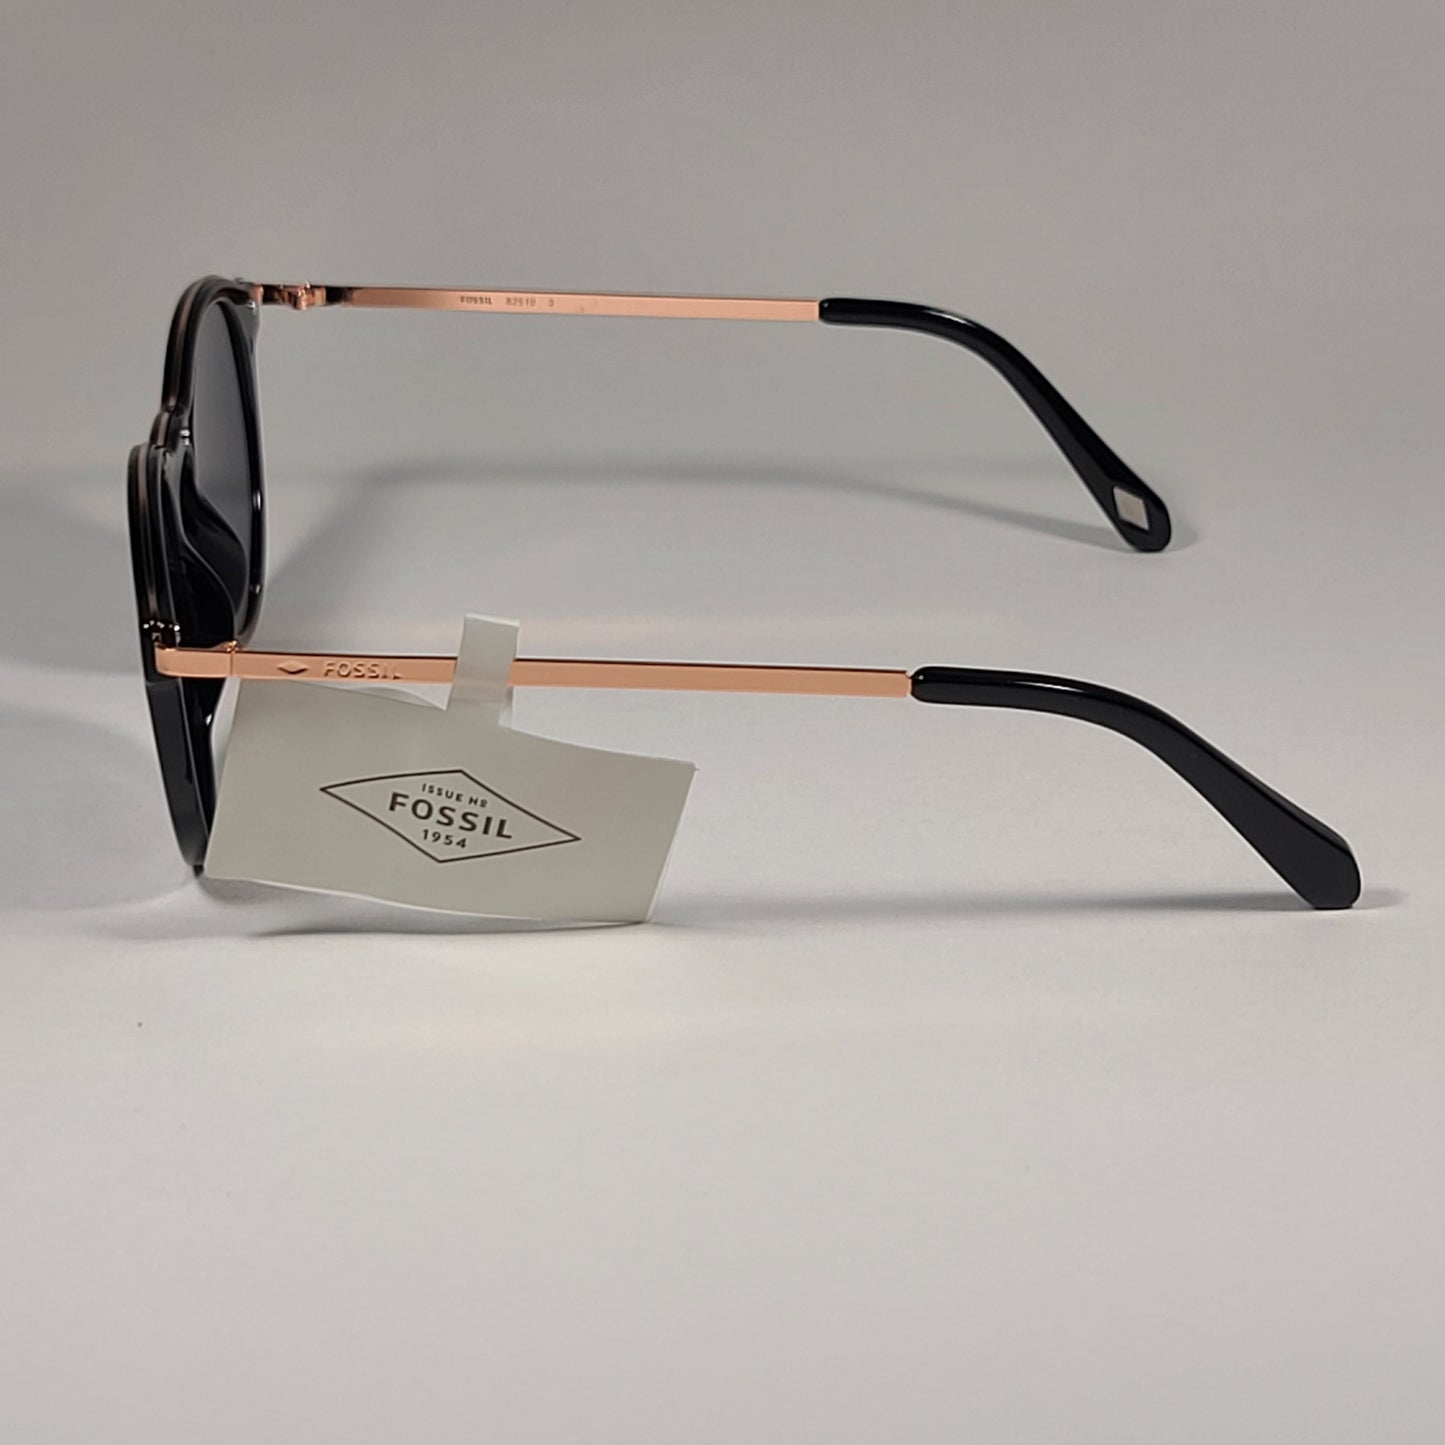 Fossil Round FW190 Women’s Sunglasses Shiny Black Gold Tone Frame Gray Lens - Sunglasses